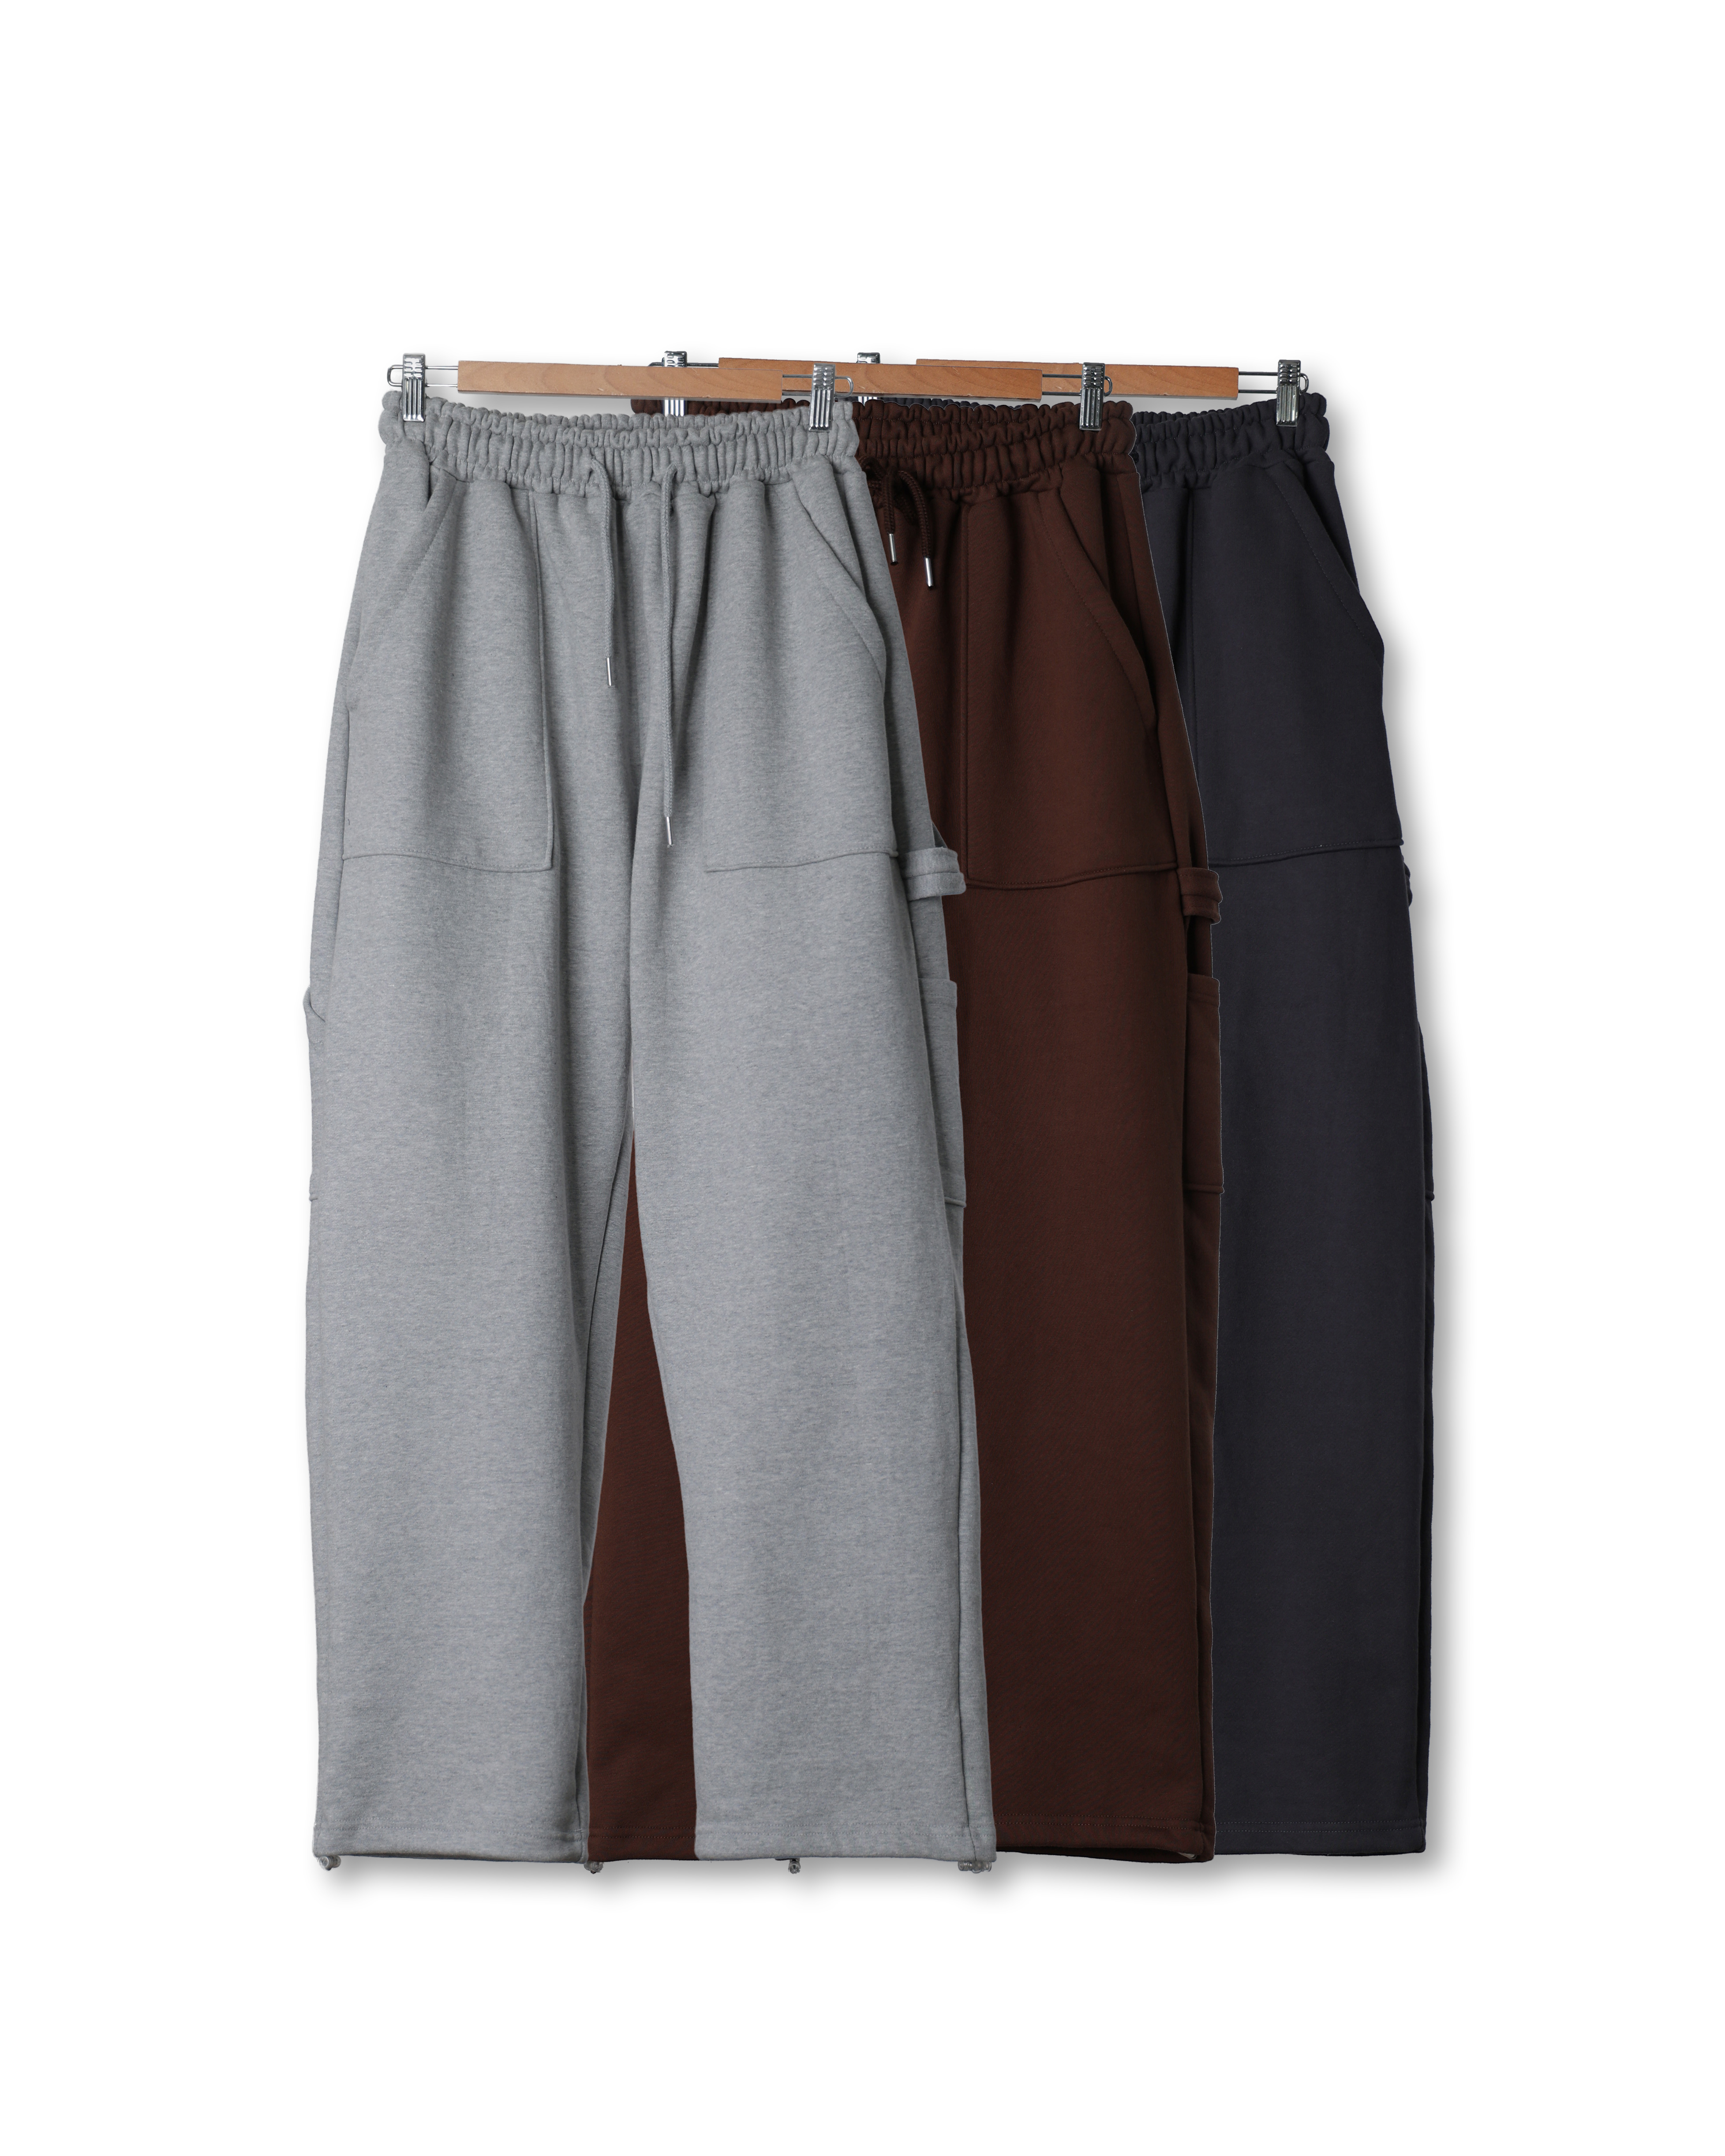 MATERIAL Carpenter Fatigue Sweat Pants (Charcoal/Brown/Gray)